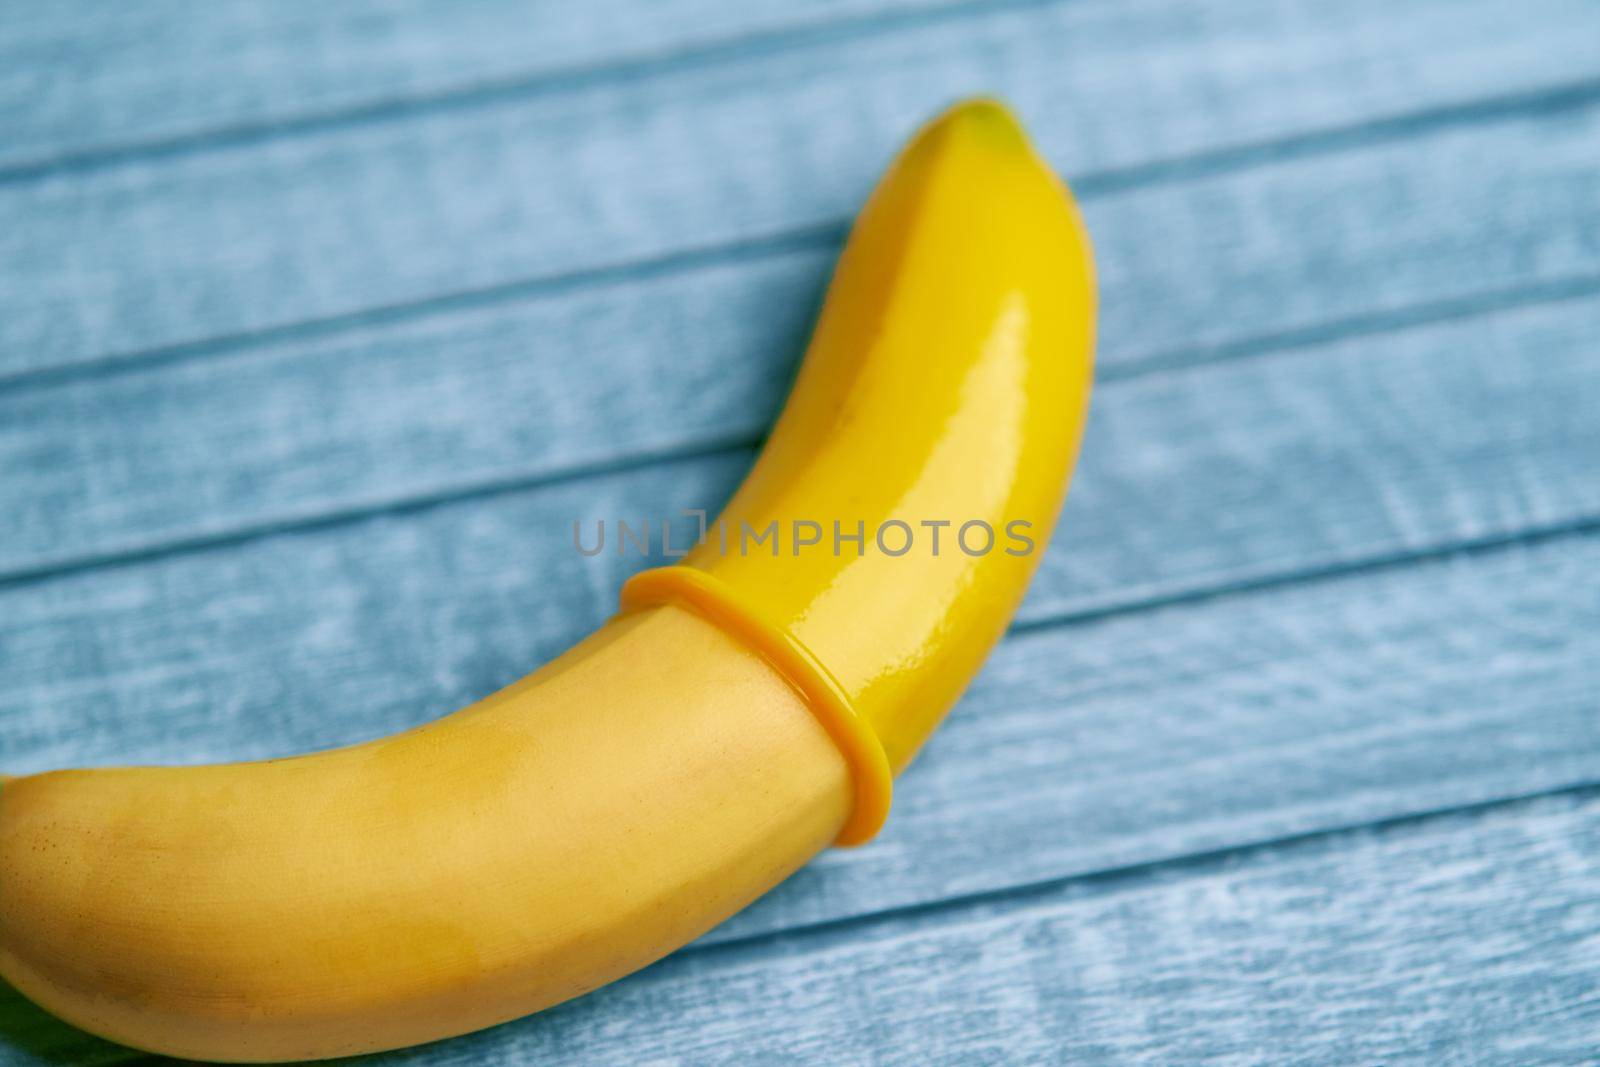 Condom and yellow banana by snep_photo